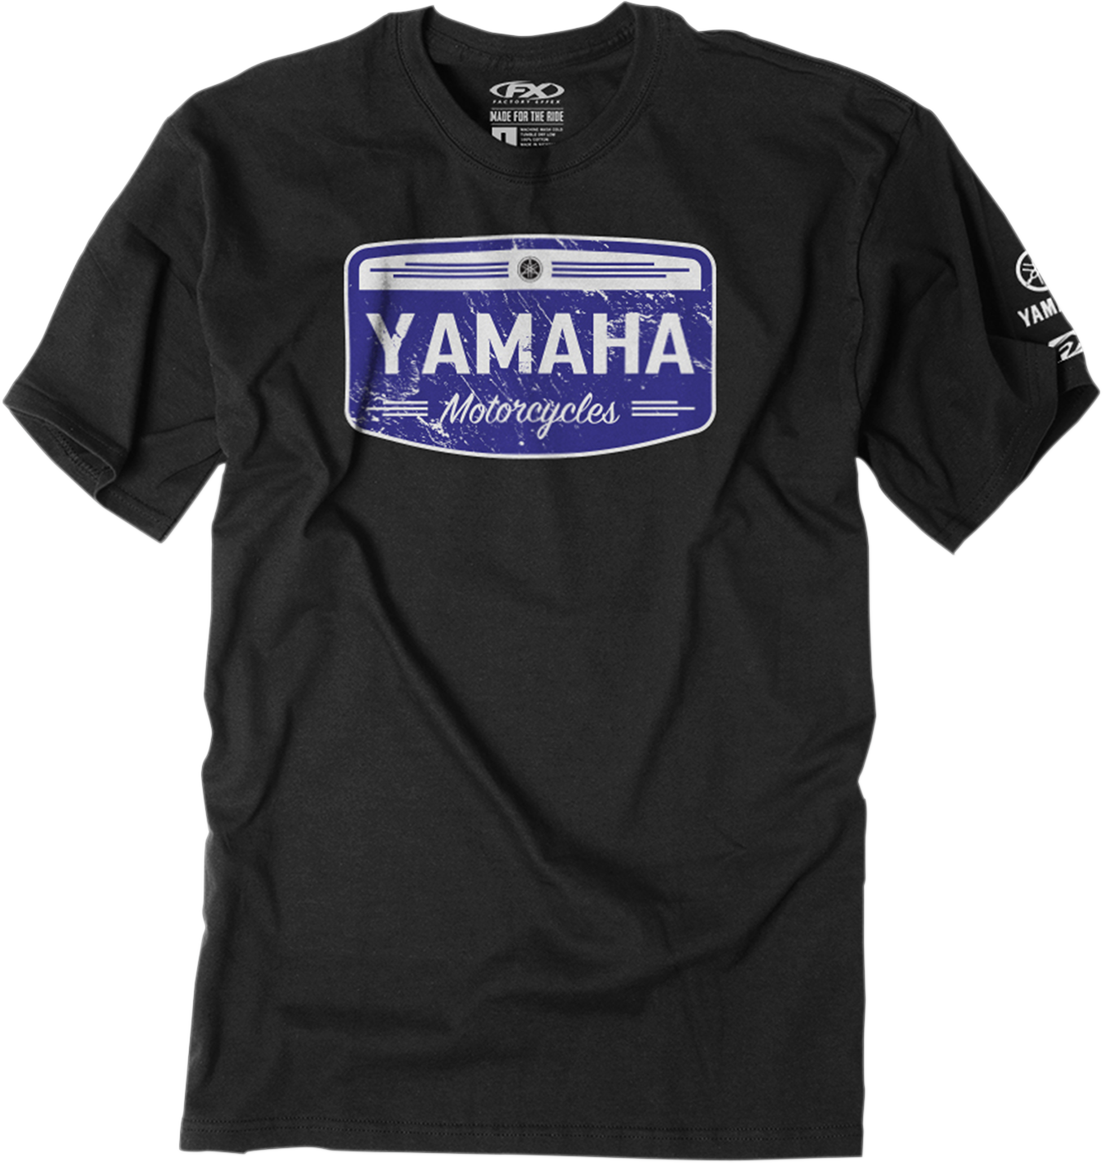 FACTORY EFFEX Yamaha Rev T-Shirt - Black - Large 22-87214